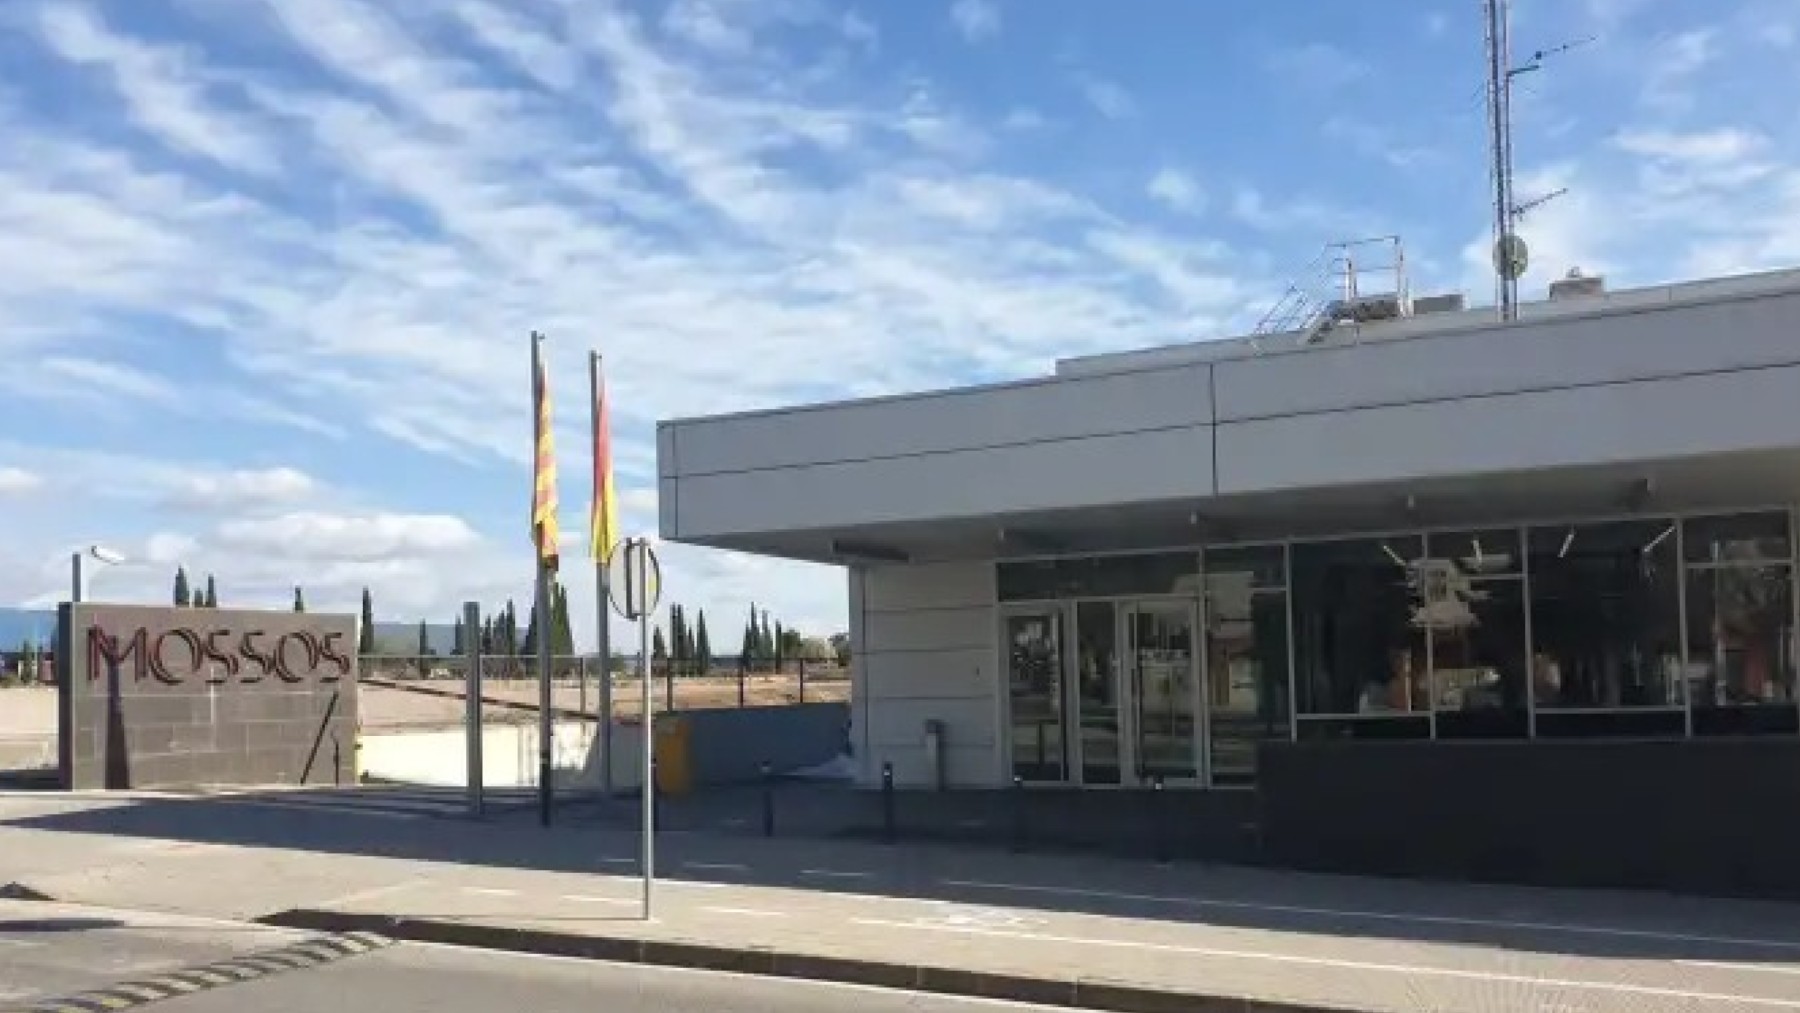 Comisaría de los Mossos d’Esquadra en Valls, Tarragona.